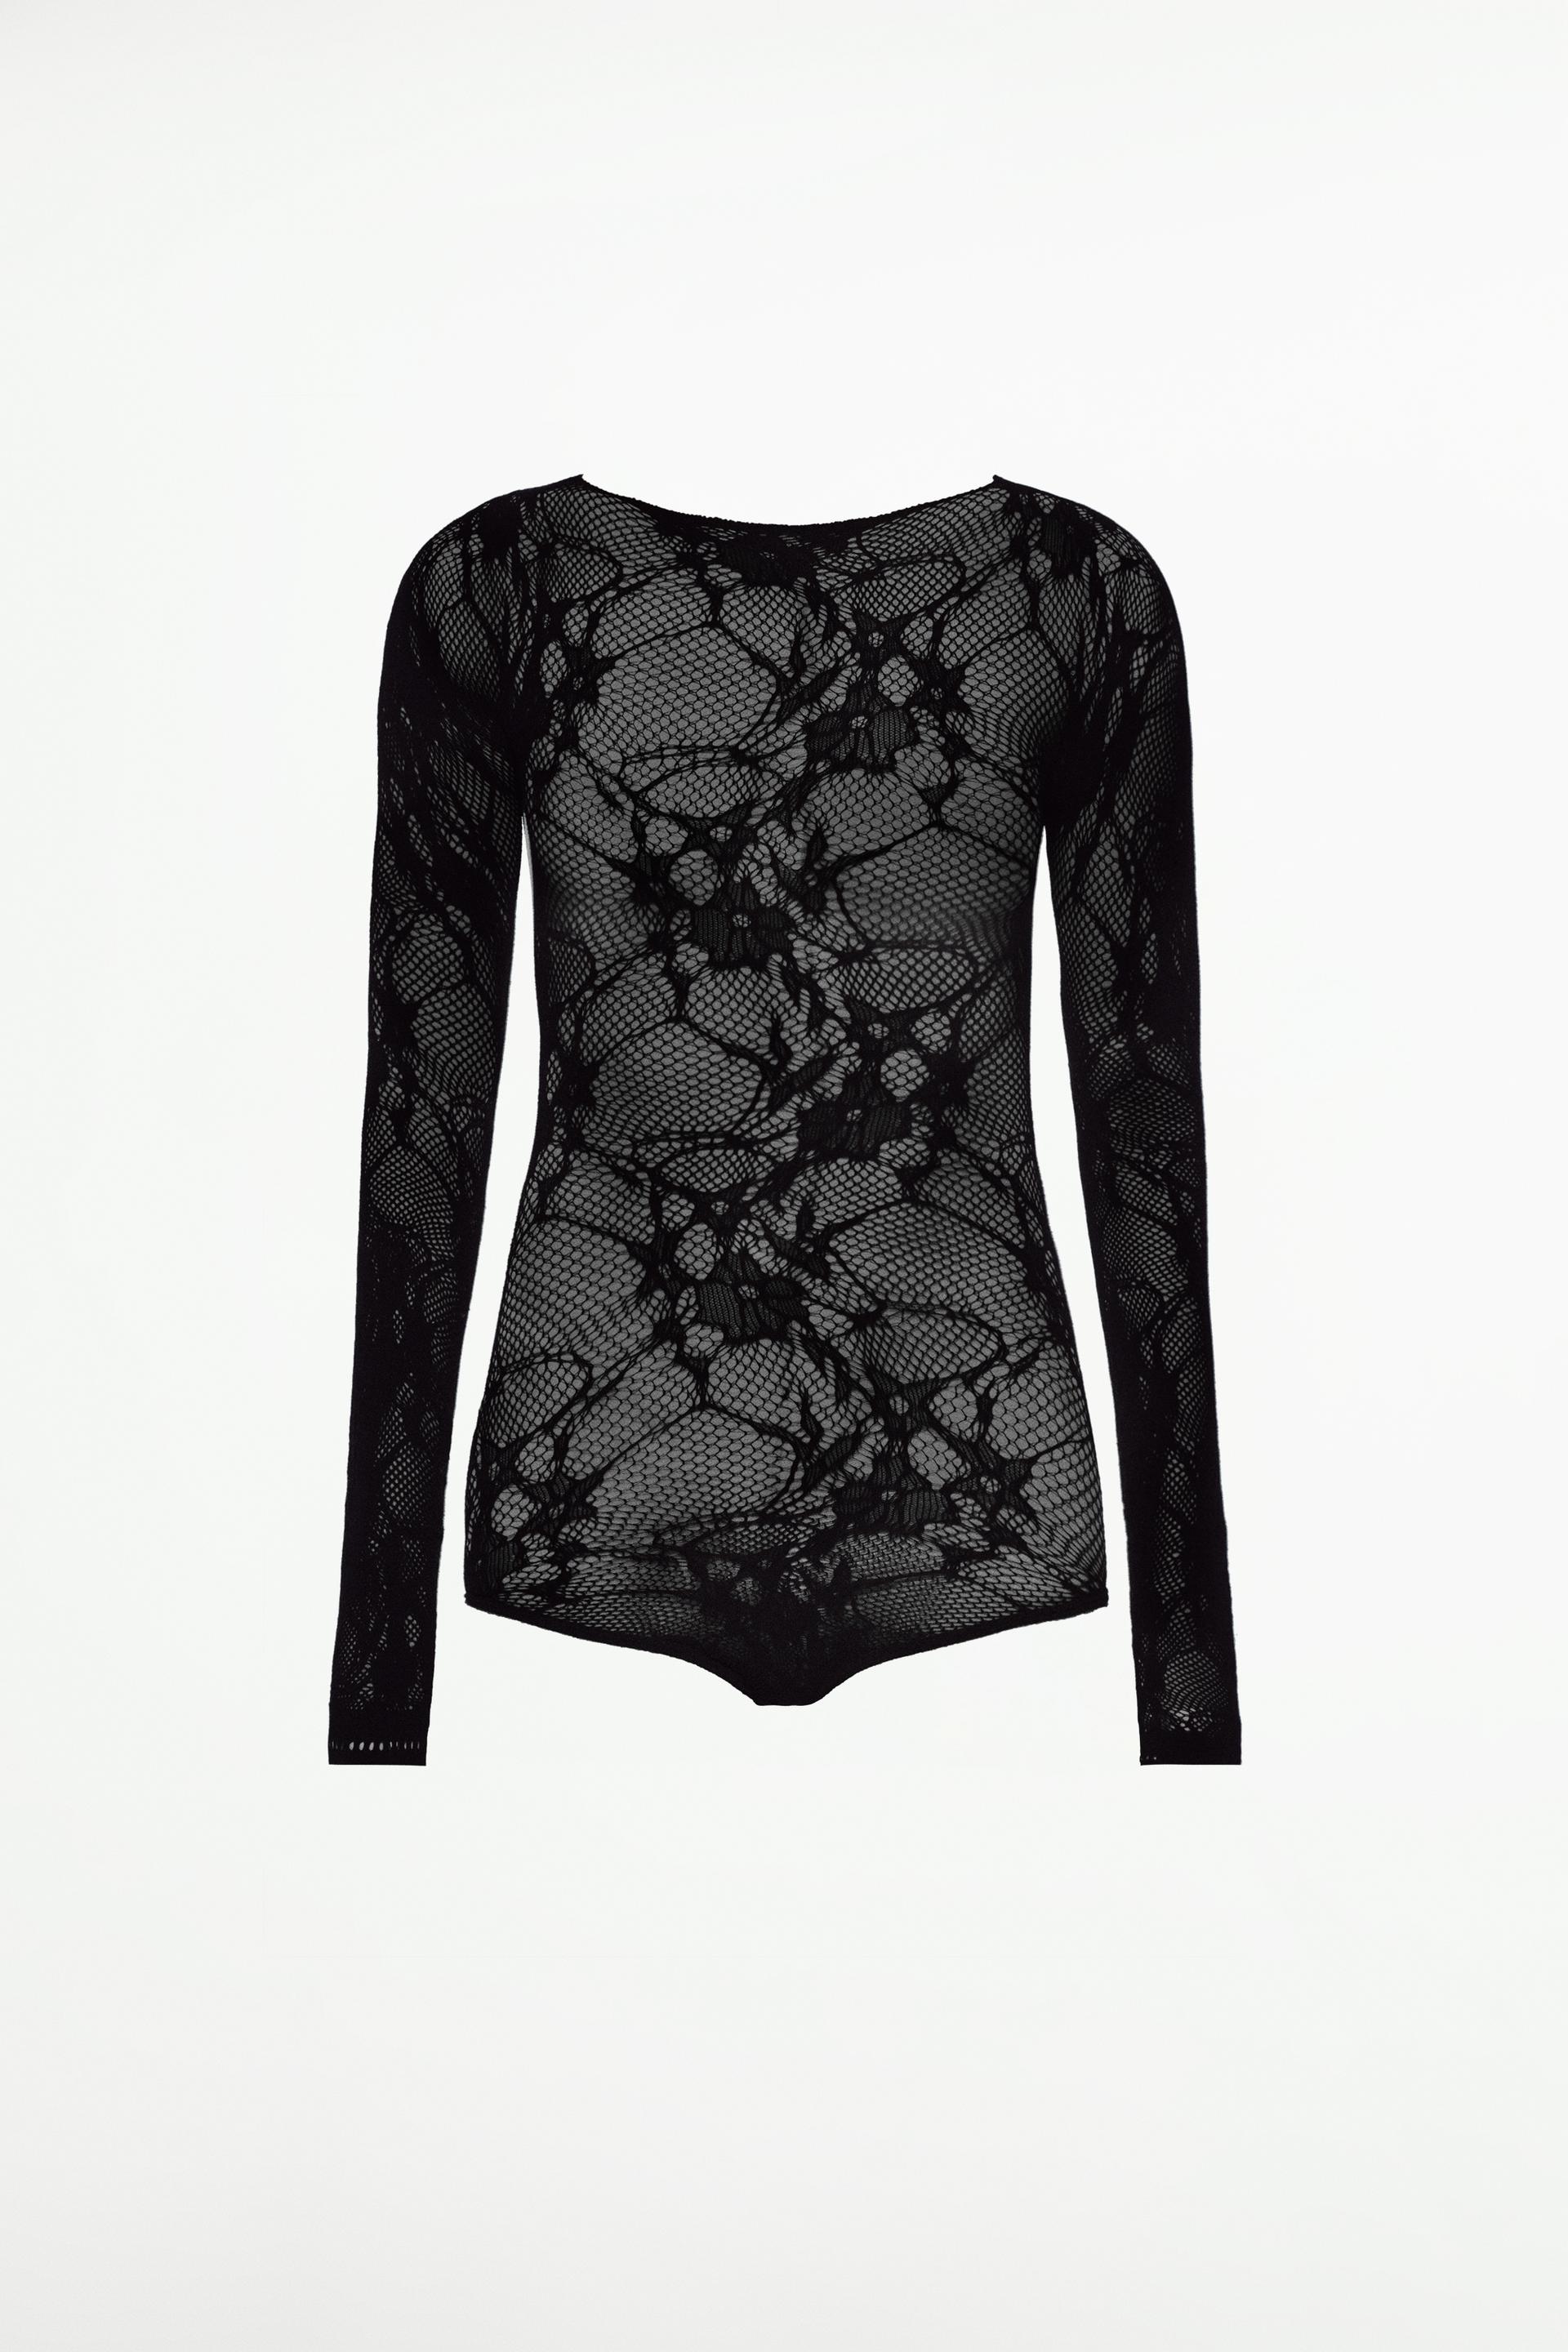 Zara, Tops, Zara Semi Sheer Lace Bodysuit Black Nwt